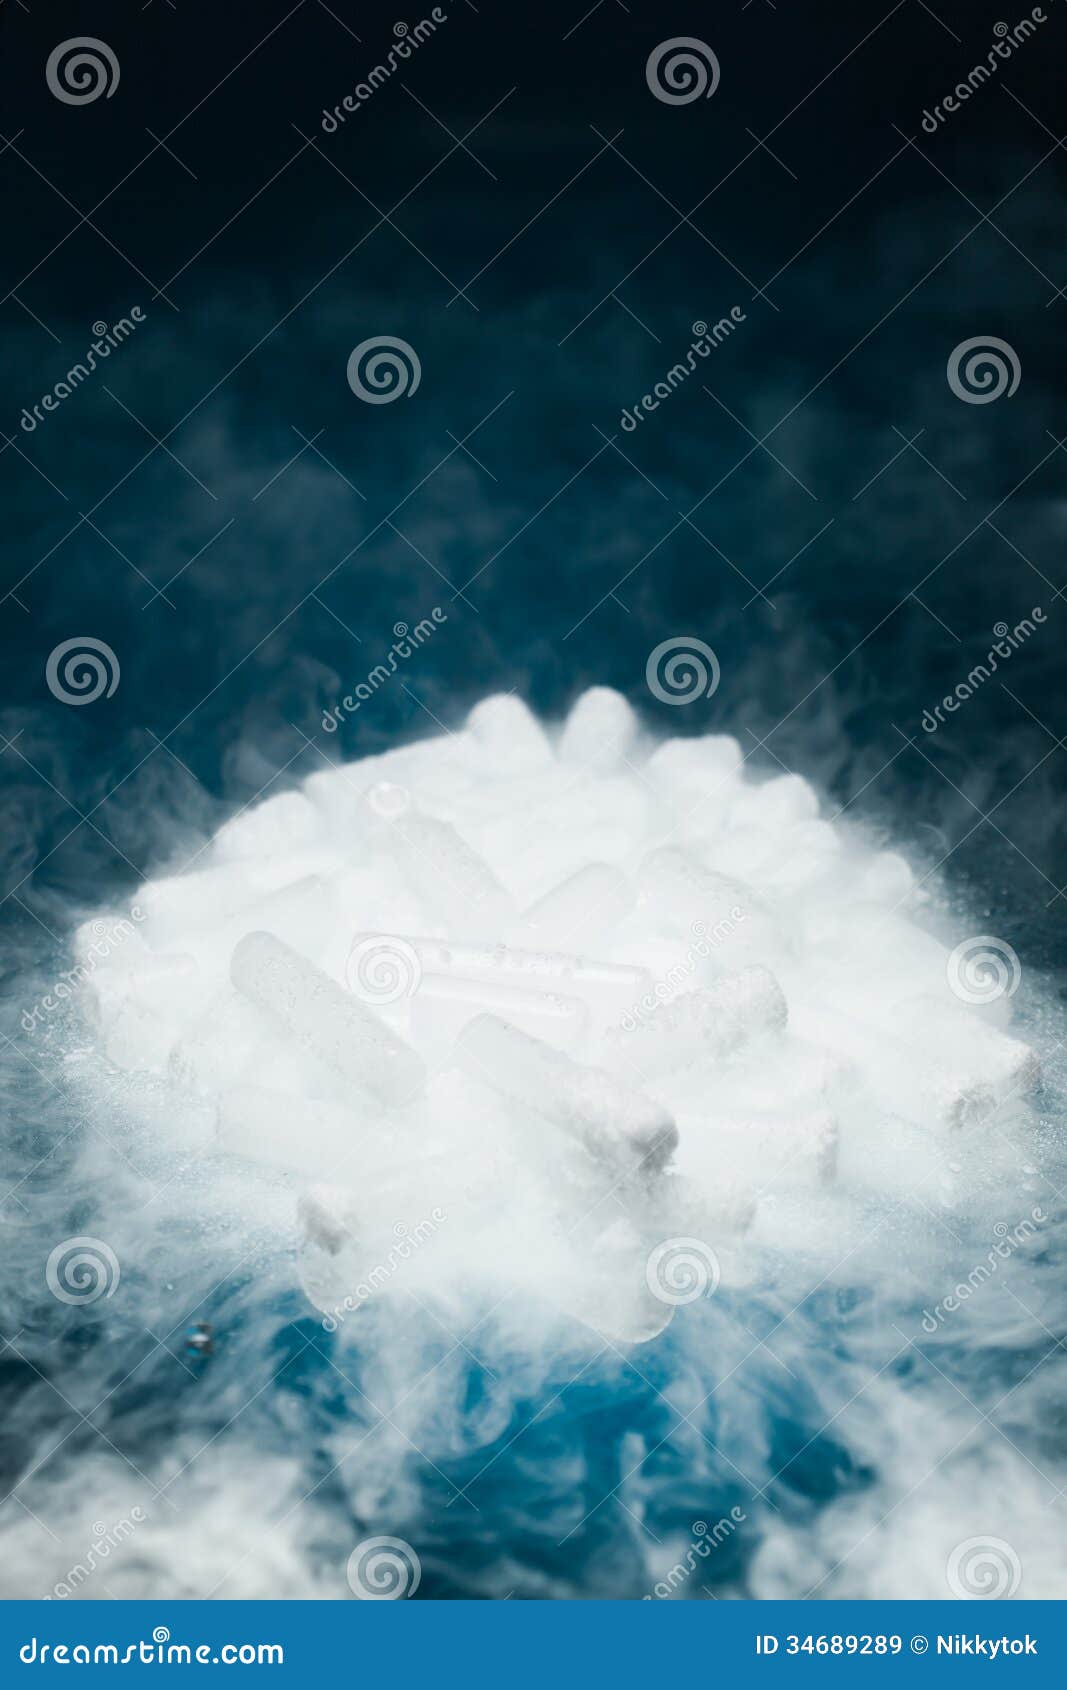 dry ice with vapor